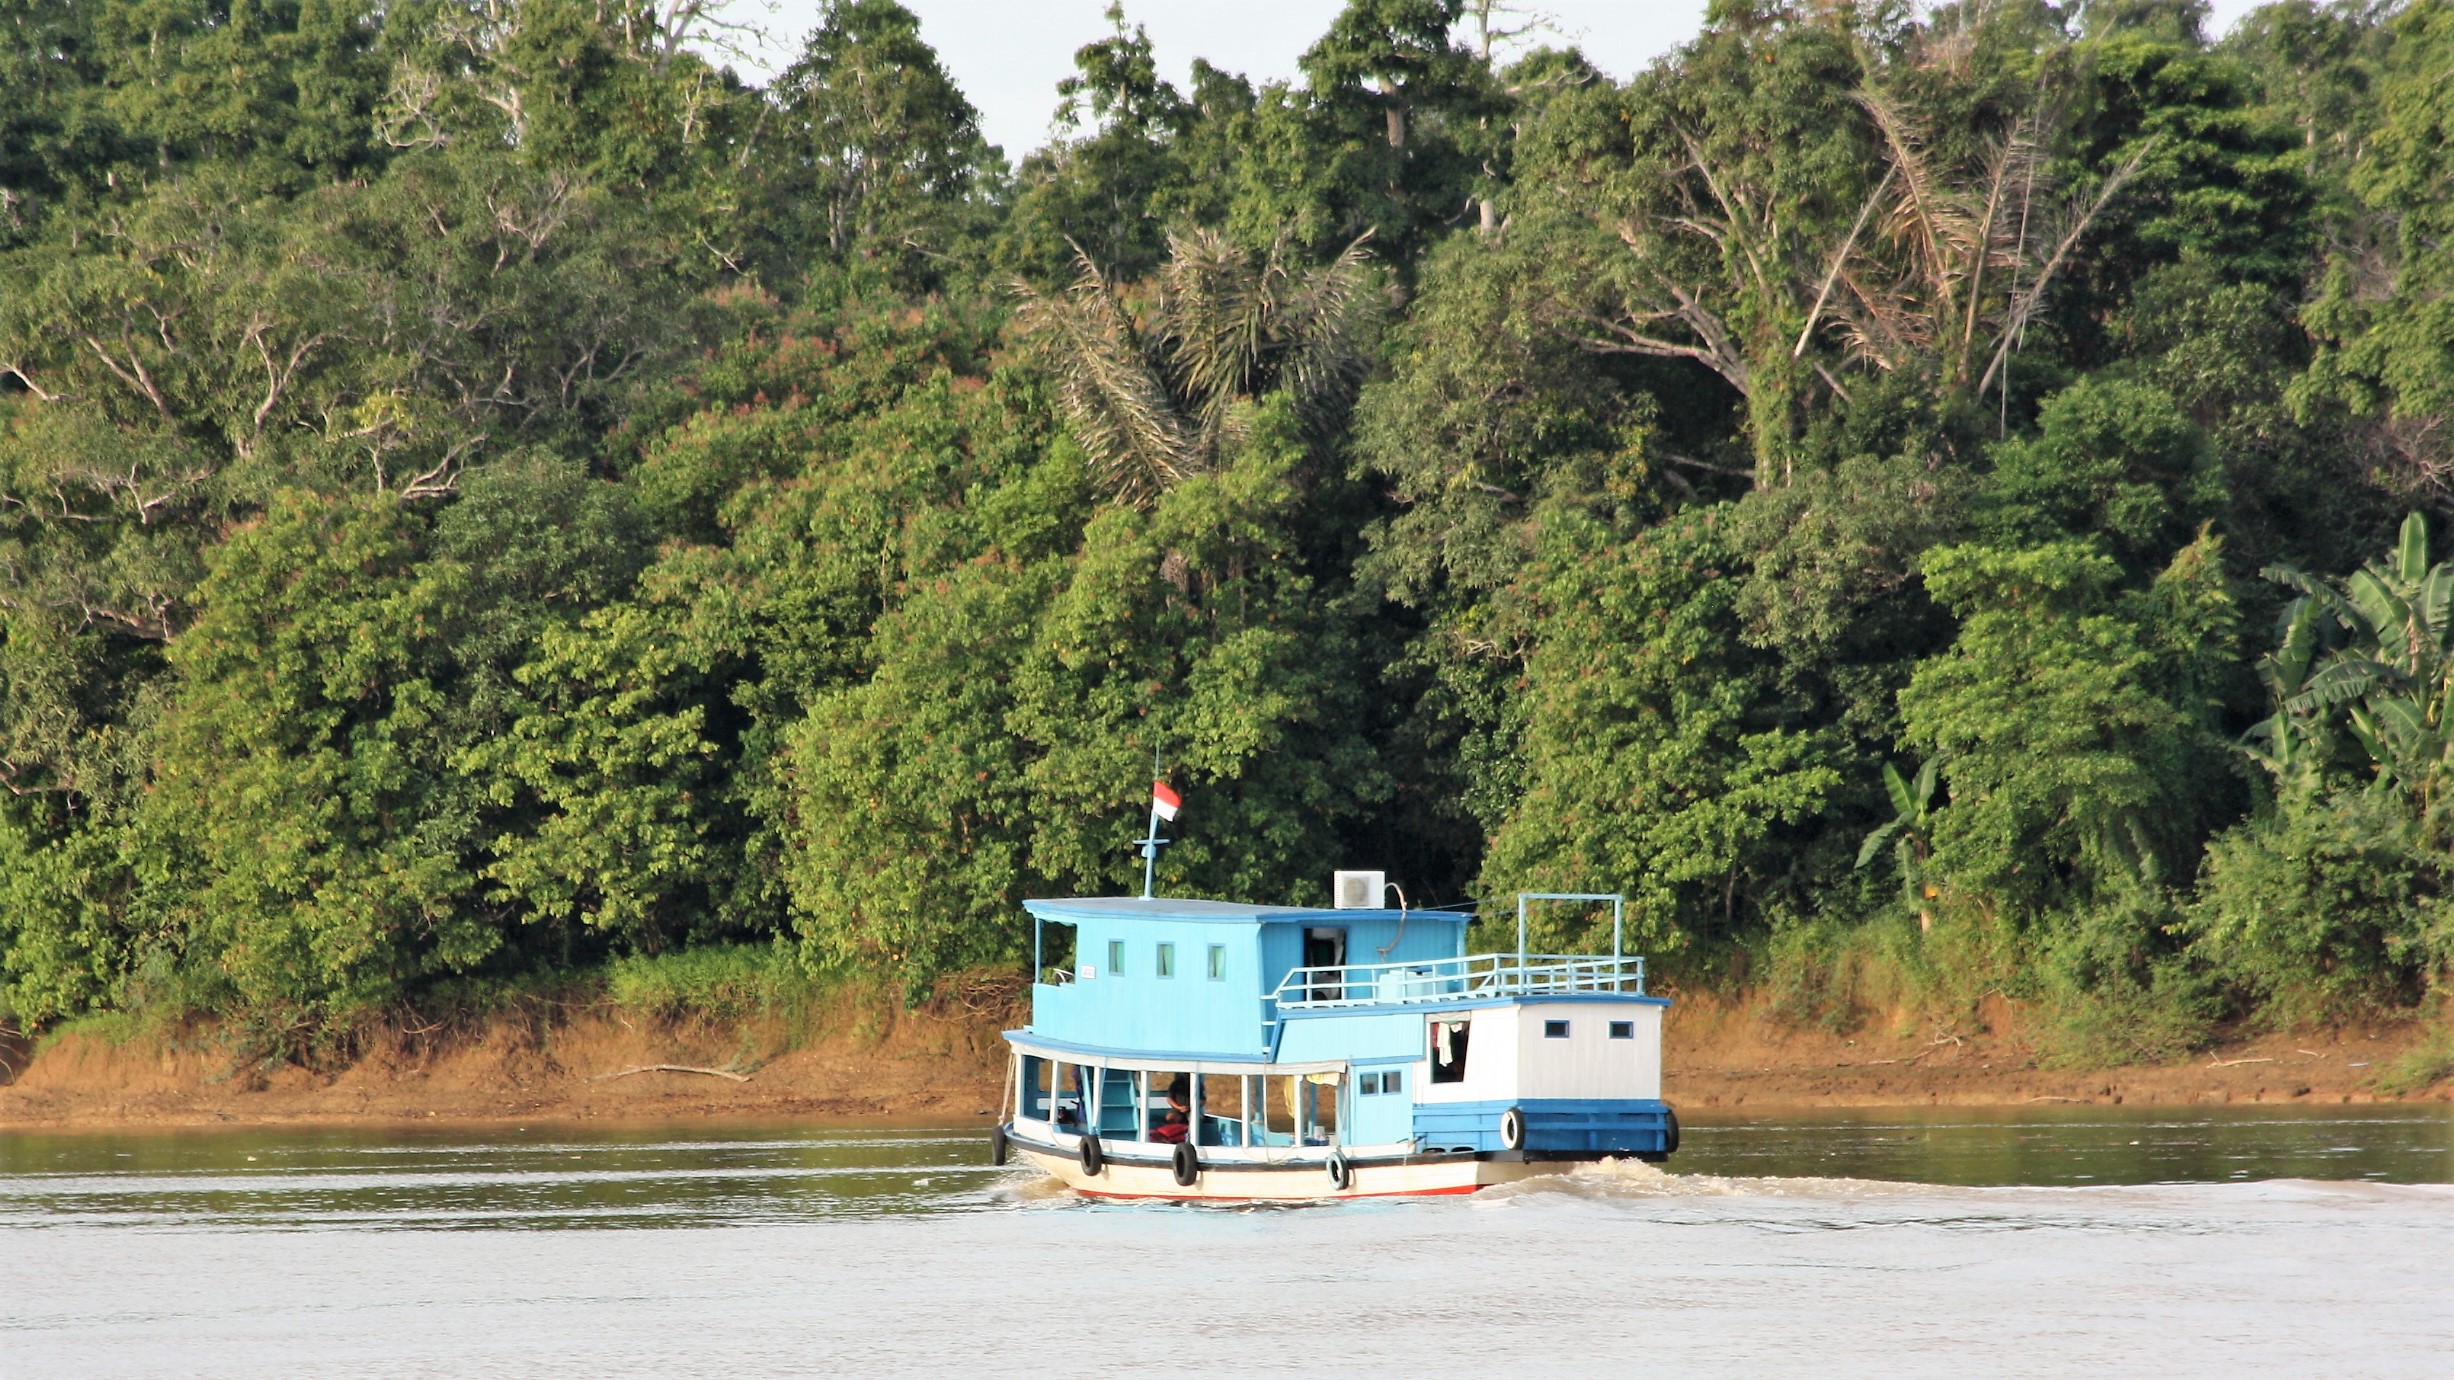 Mahakam River Cruise, Mahakam River tour, Mahakam river rain forest, borneo, kalimantan, dayak culture, journey, tours, trip, safari, wildlife, expedition, kalimantan, indonesia